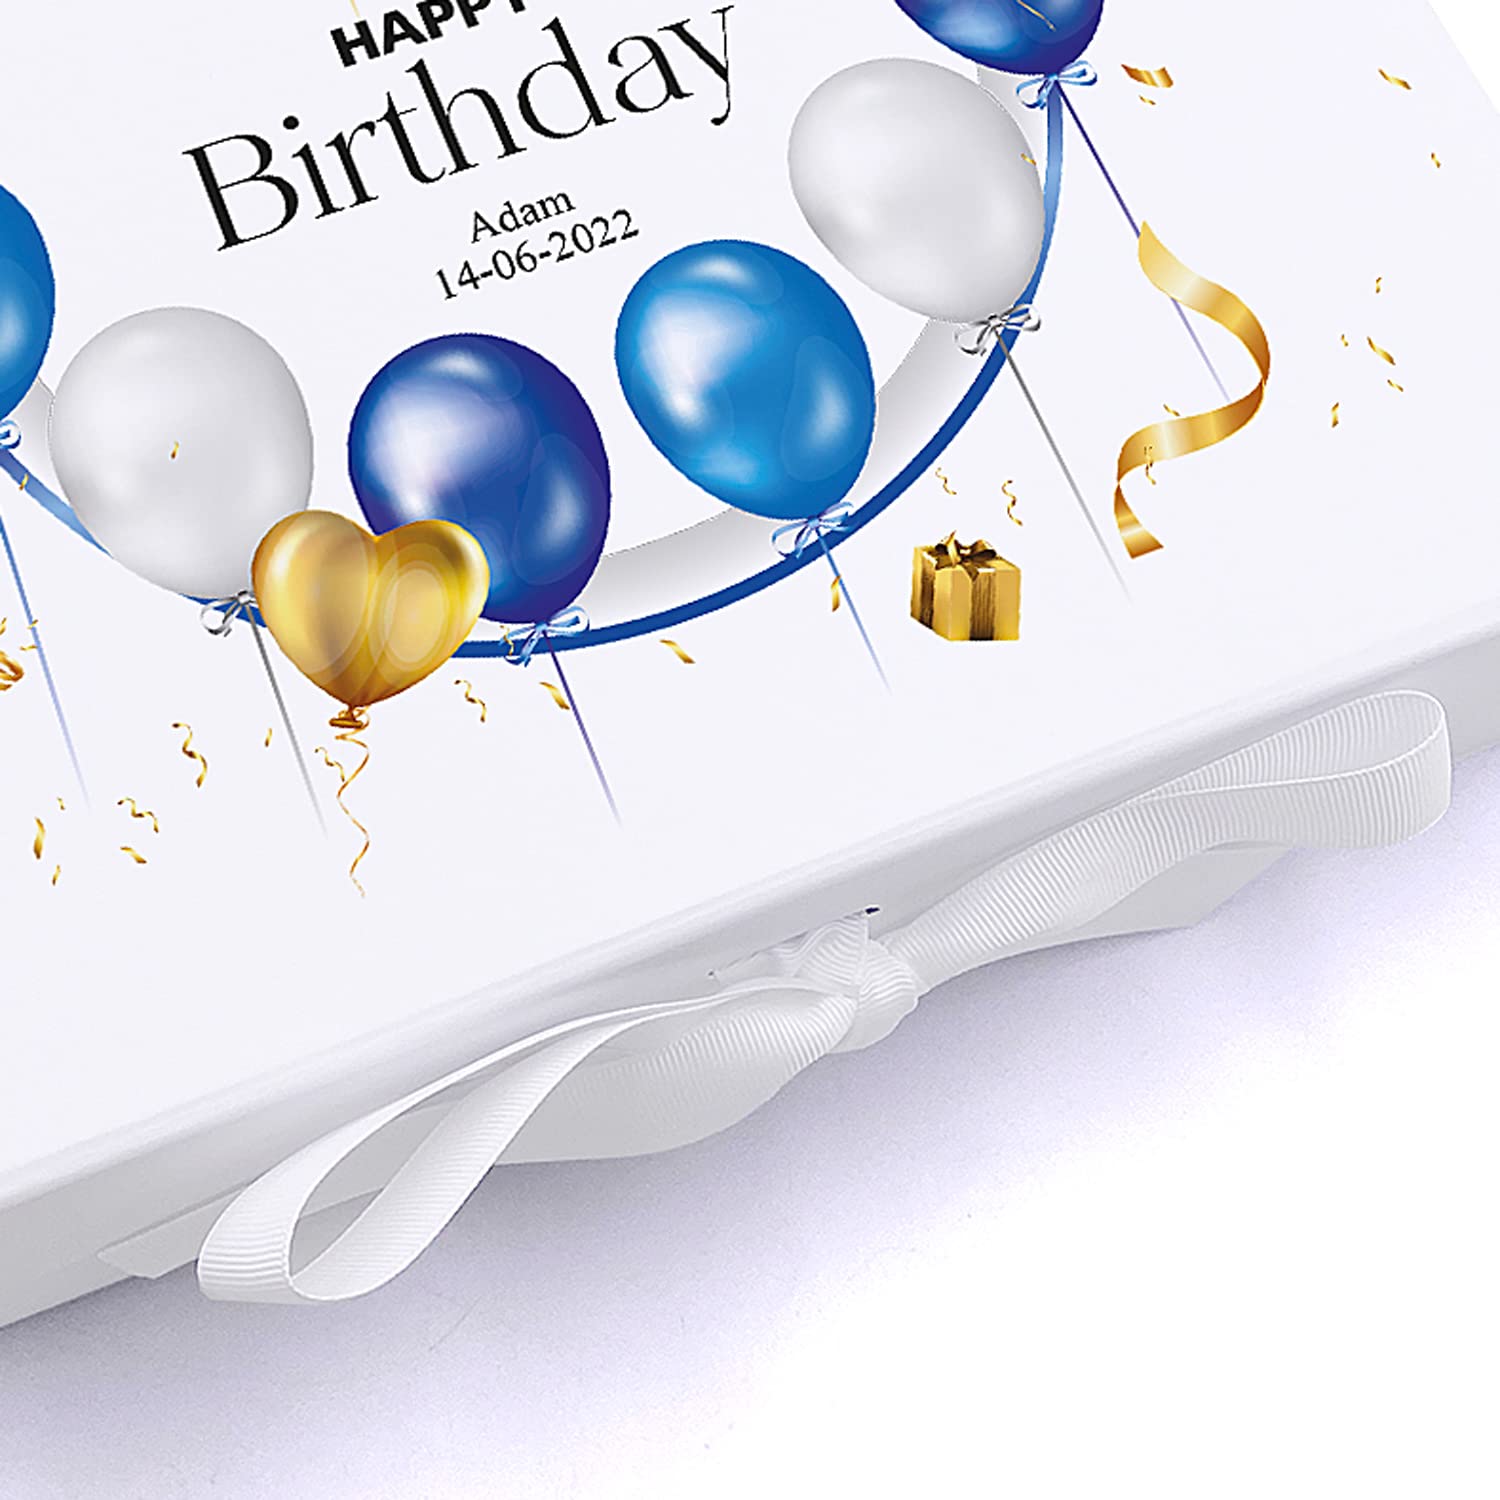 ukgiftstoreonline 70th Birthday Gift Personalised Keepsake Memory Box With Blue Balloons